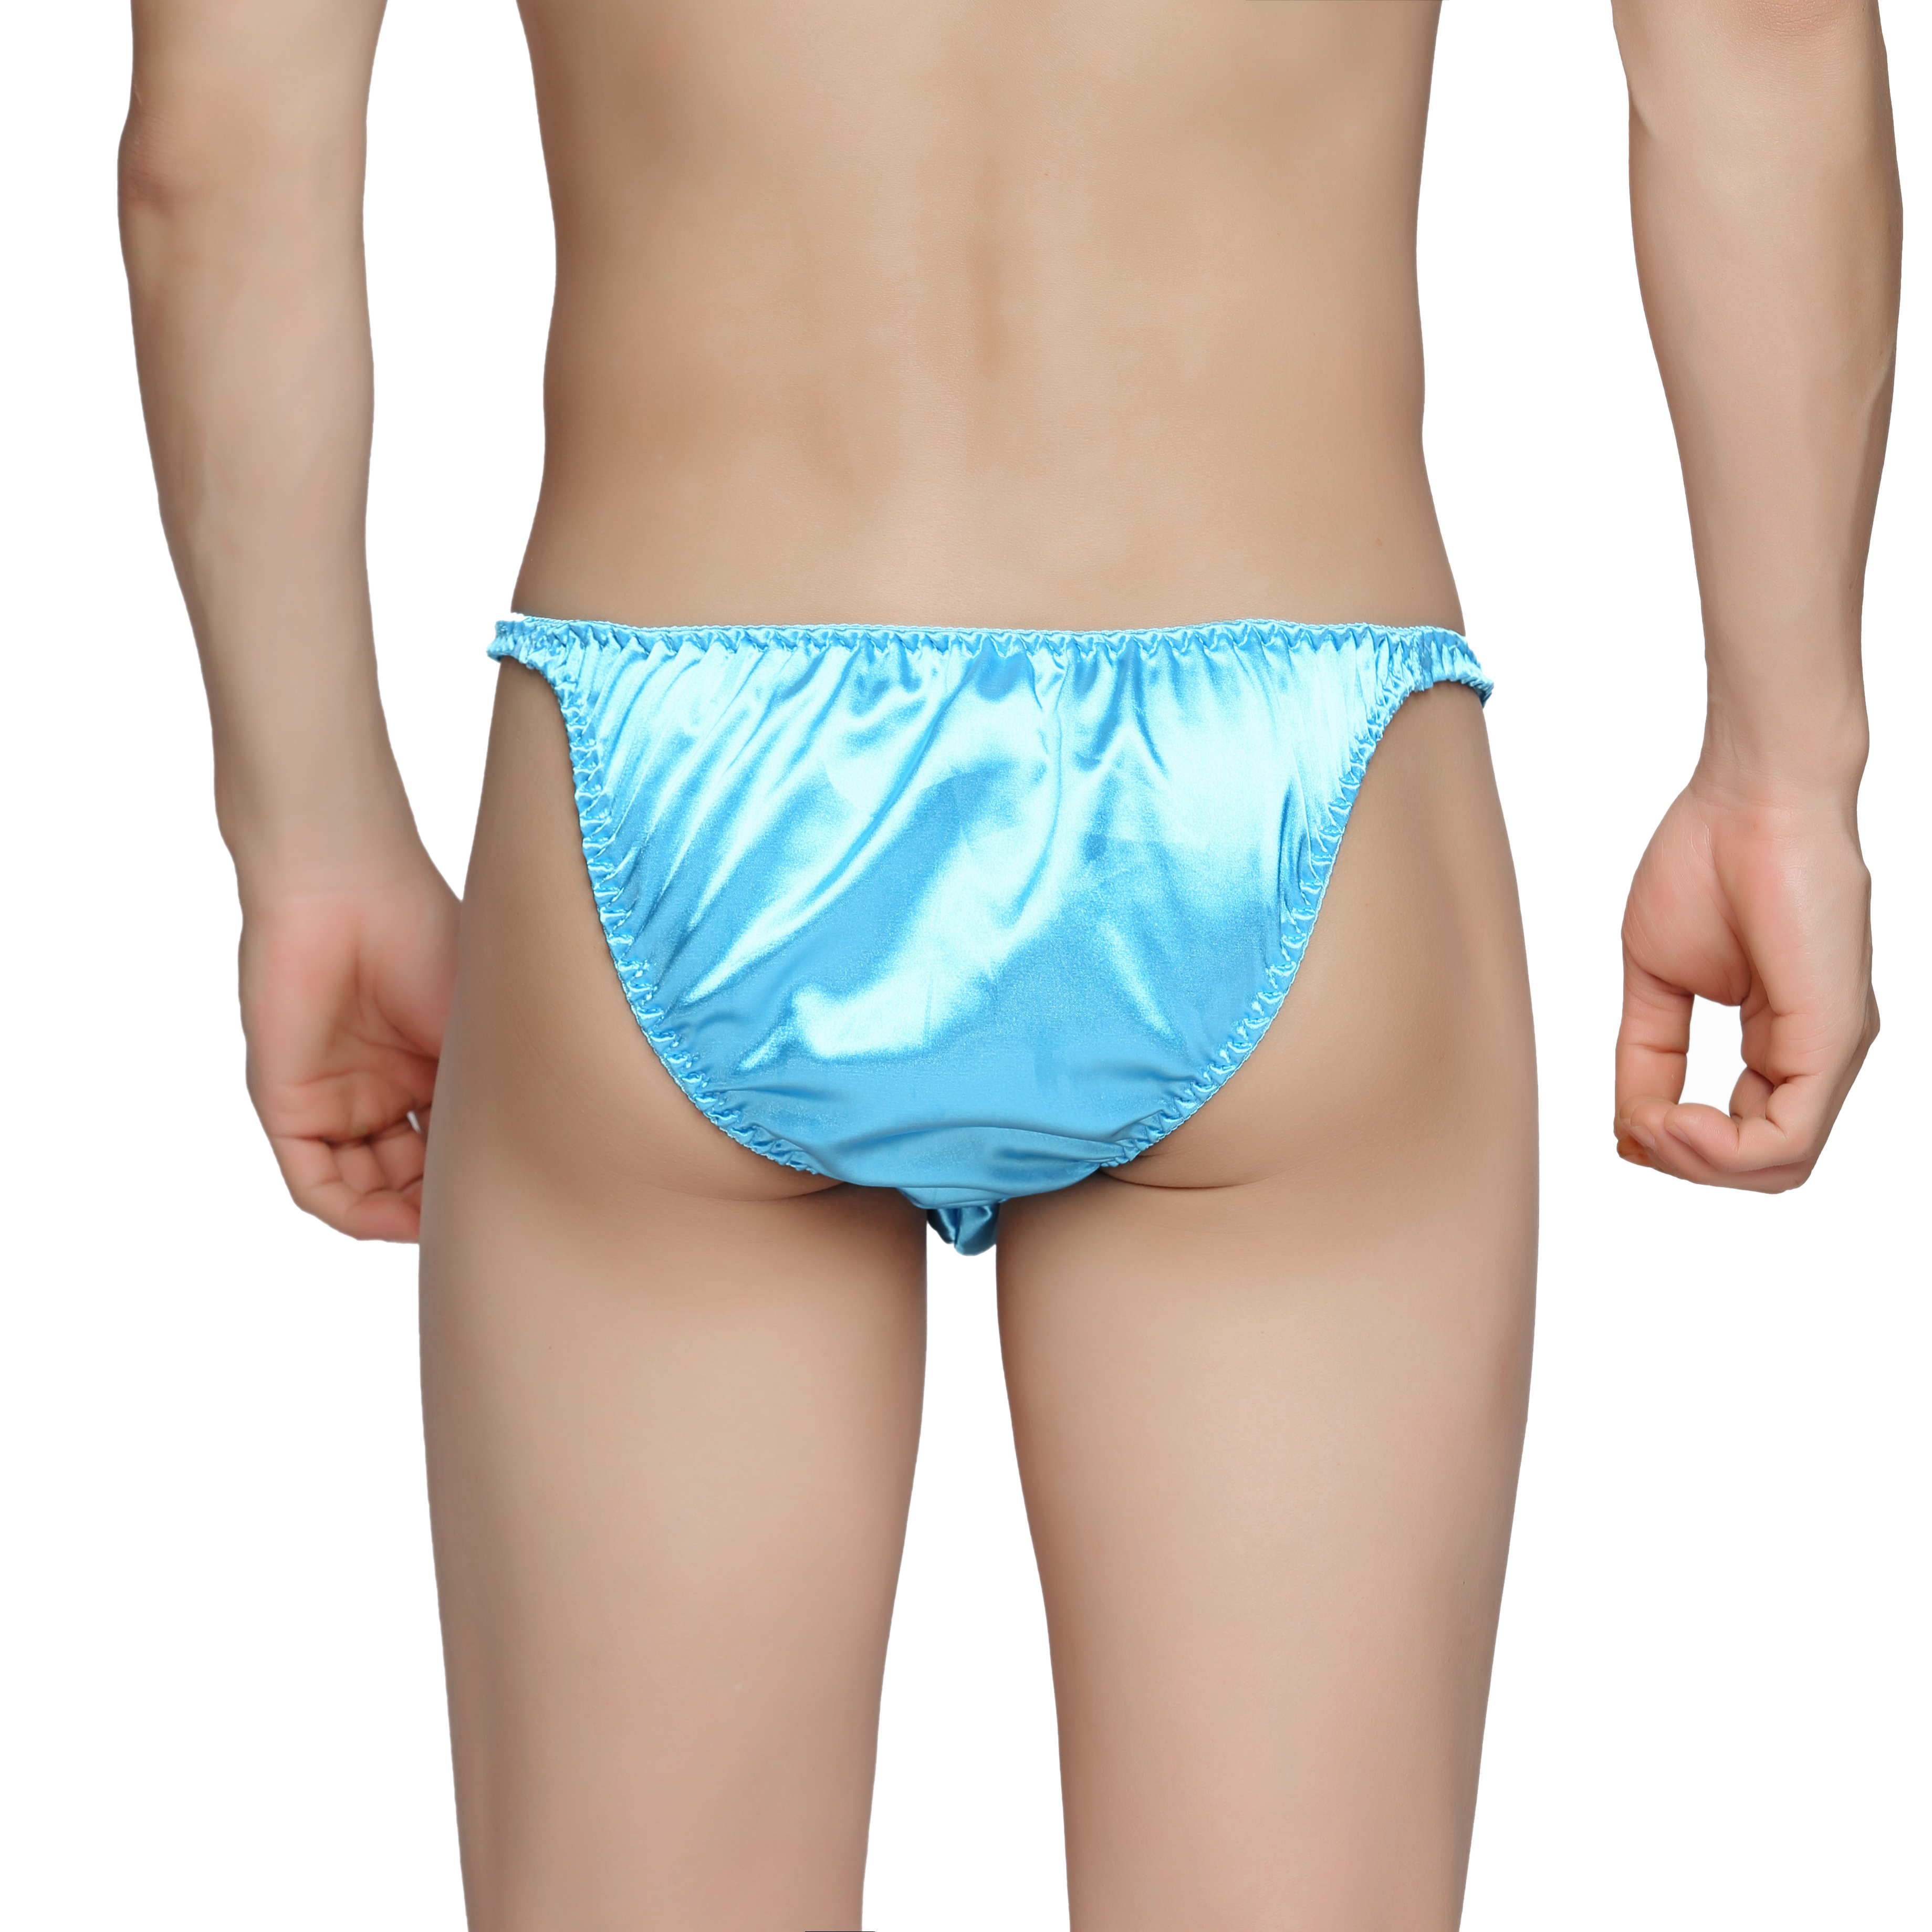 B001 Red Men's Soft Satin Low Rise Briefs Panties Open Front Hole Sissy  Bikini Underwear Open Crotch Crotchless Bikini Panty Size M L XL -   Sweden